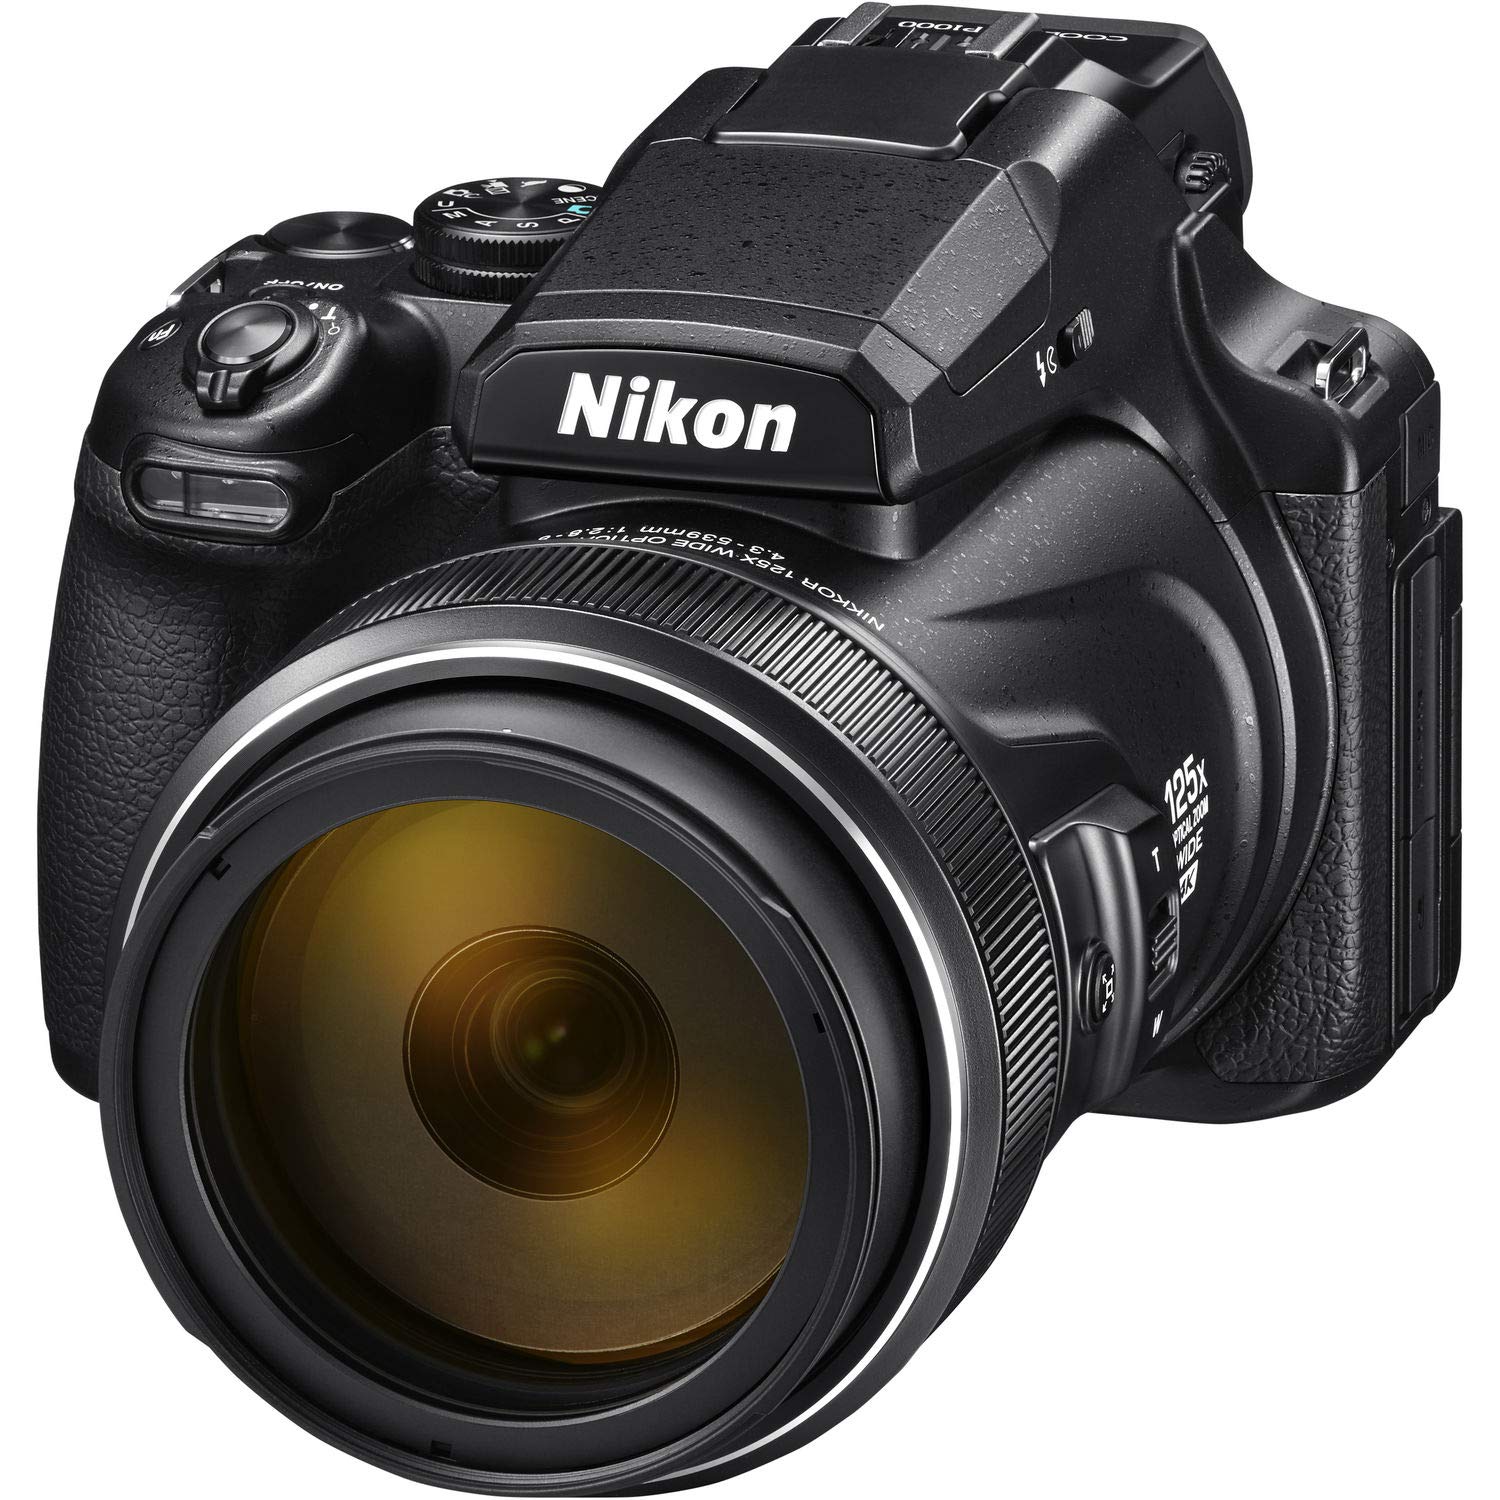 Nikon COOLPIX P1000 Digital Camera + 128GB Sandisk Extreme Memory Card Professional Bundle International Model